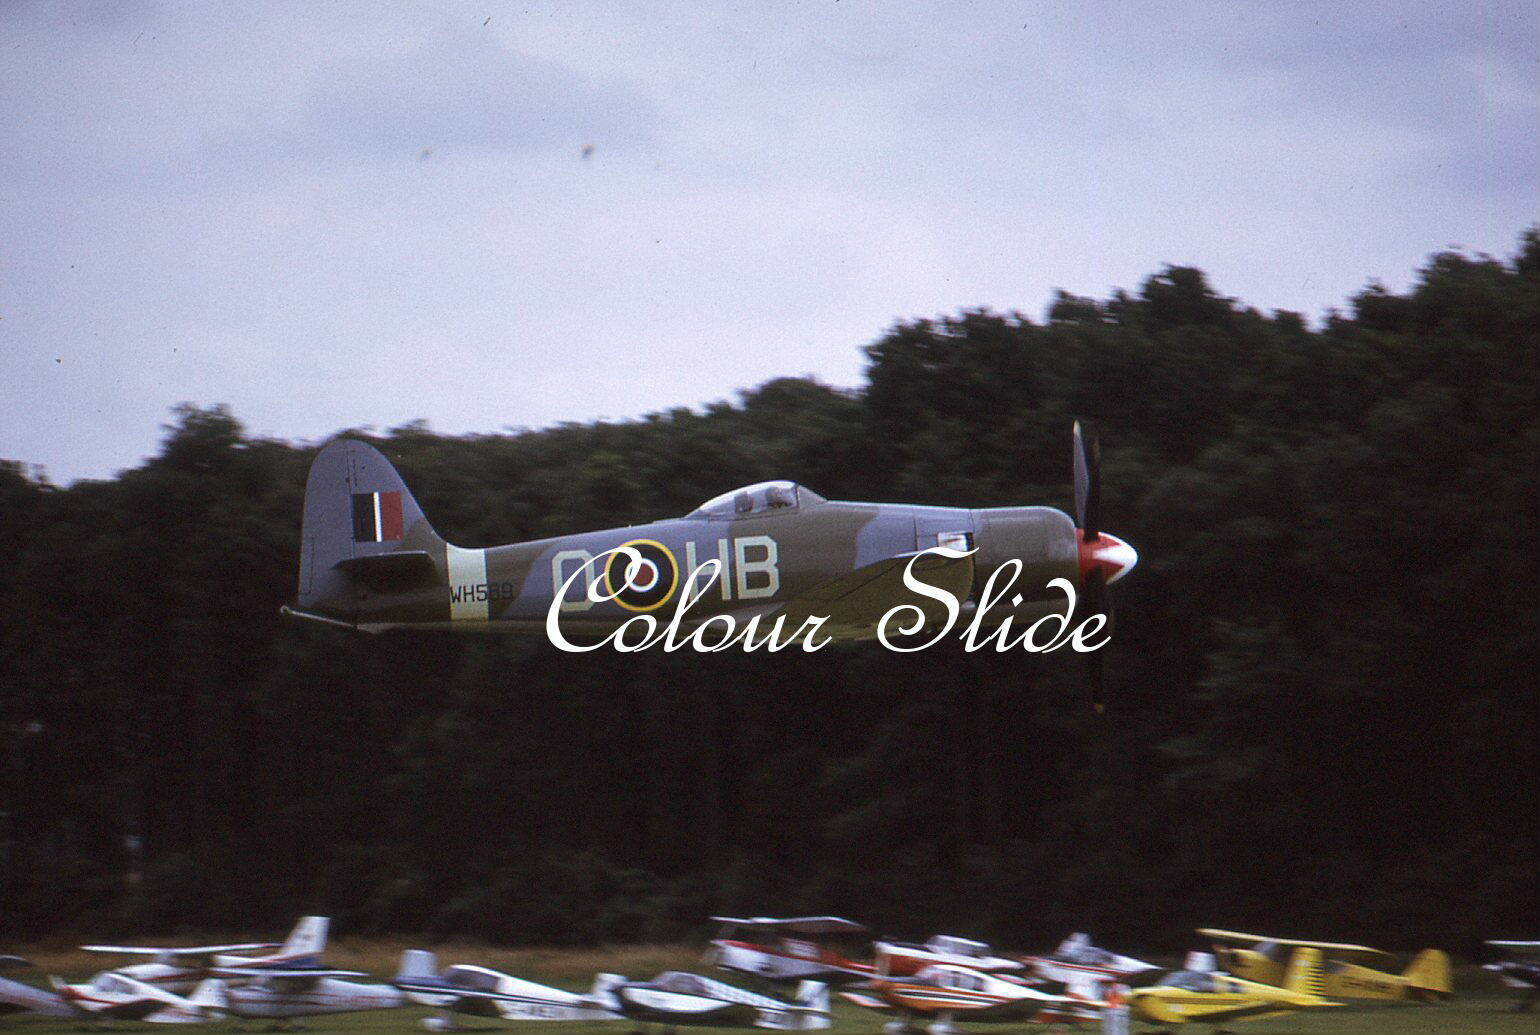 Hawker Sea Fury FB11 WH589 O-HB, 8.74, Colour Slide, Aviation Aircraft